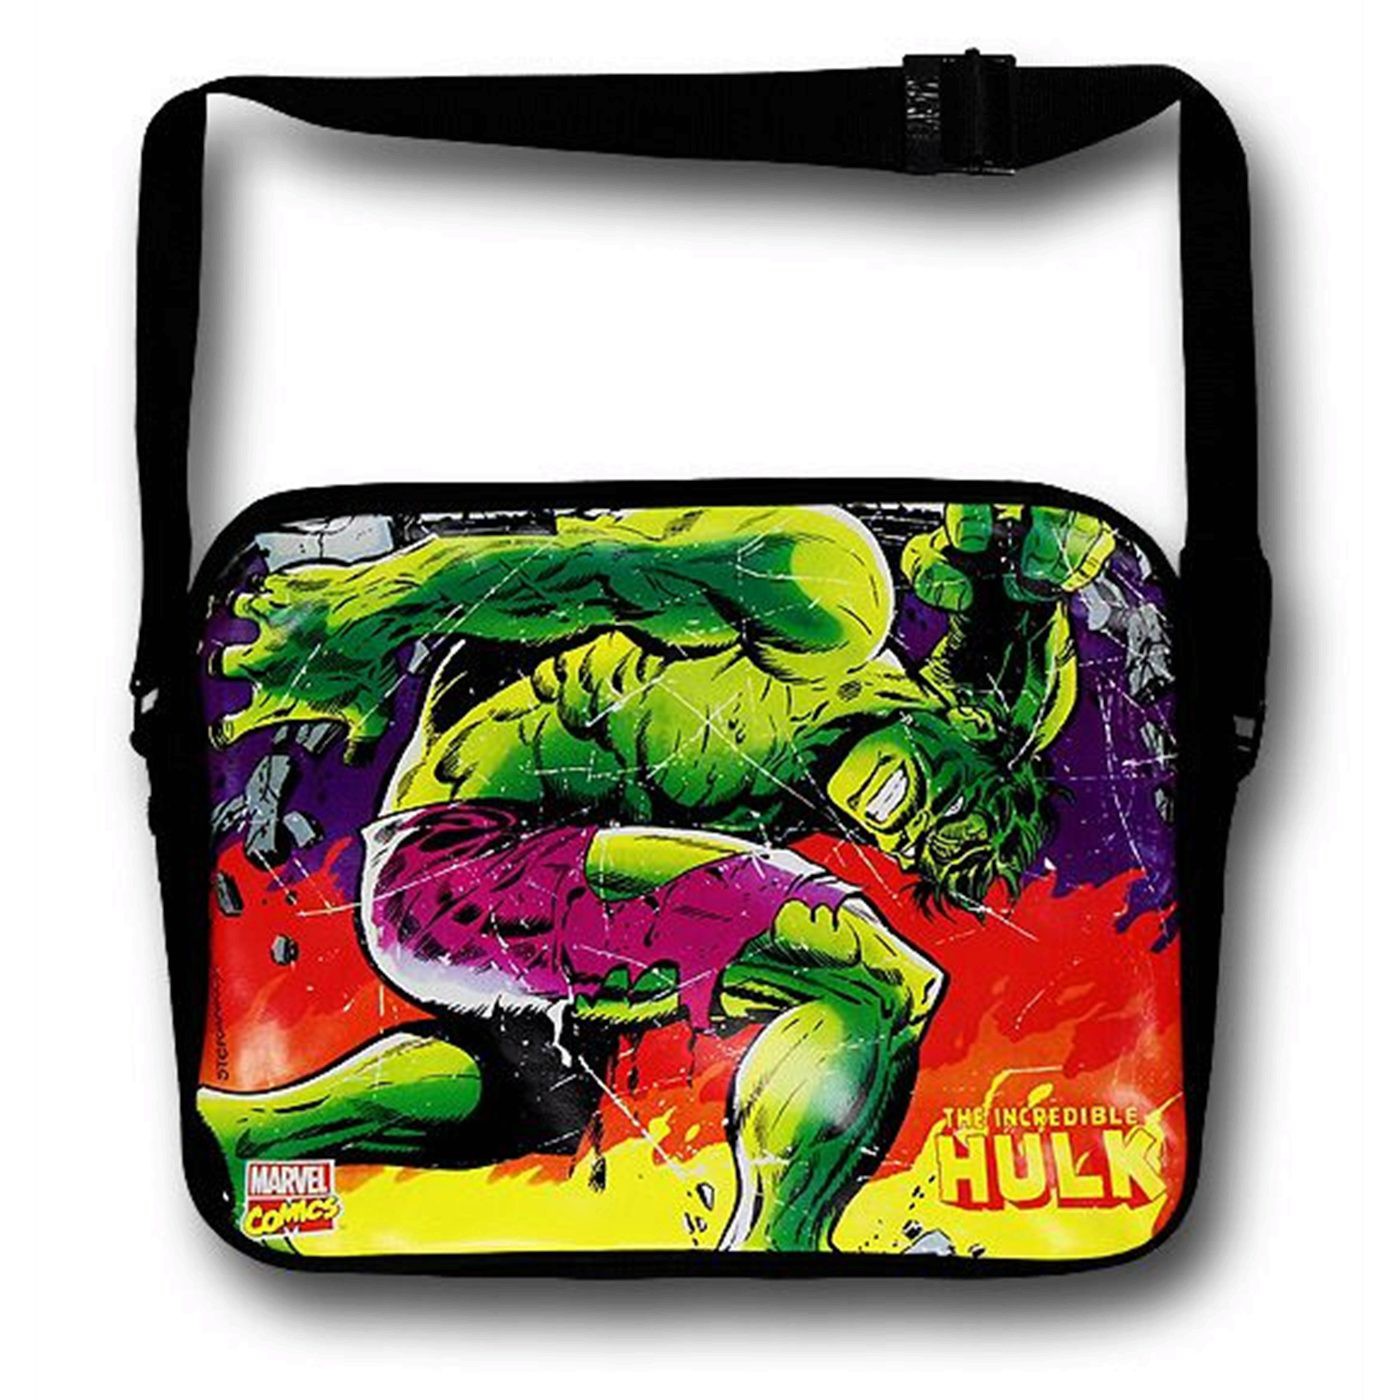 Hulk King-Size Special Cover #1 Messenger Bag